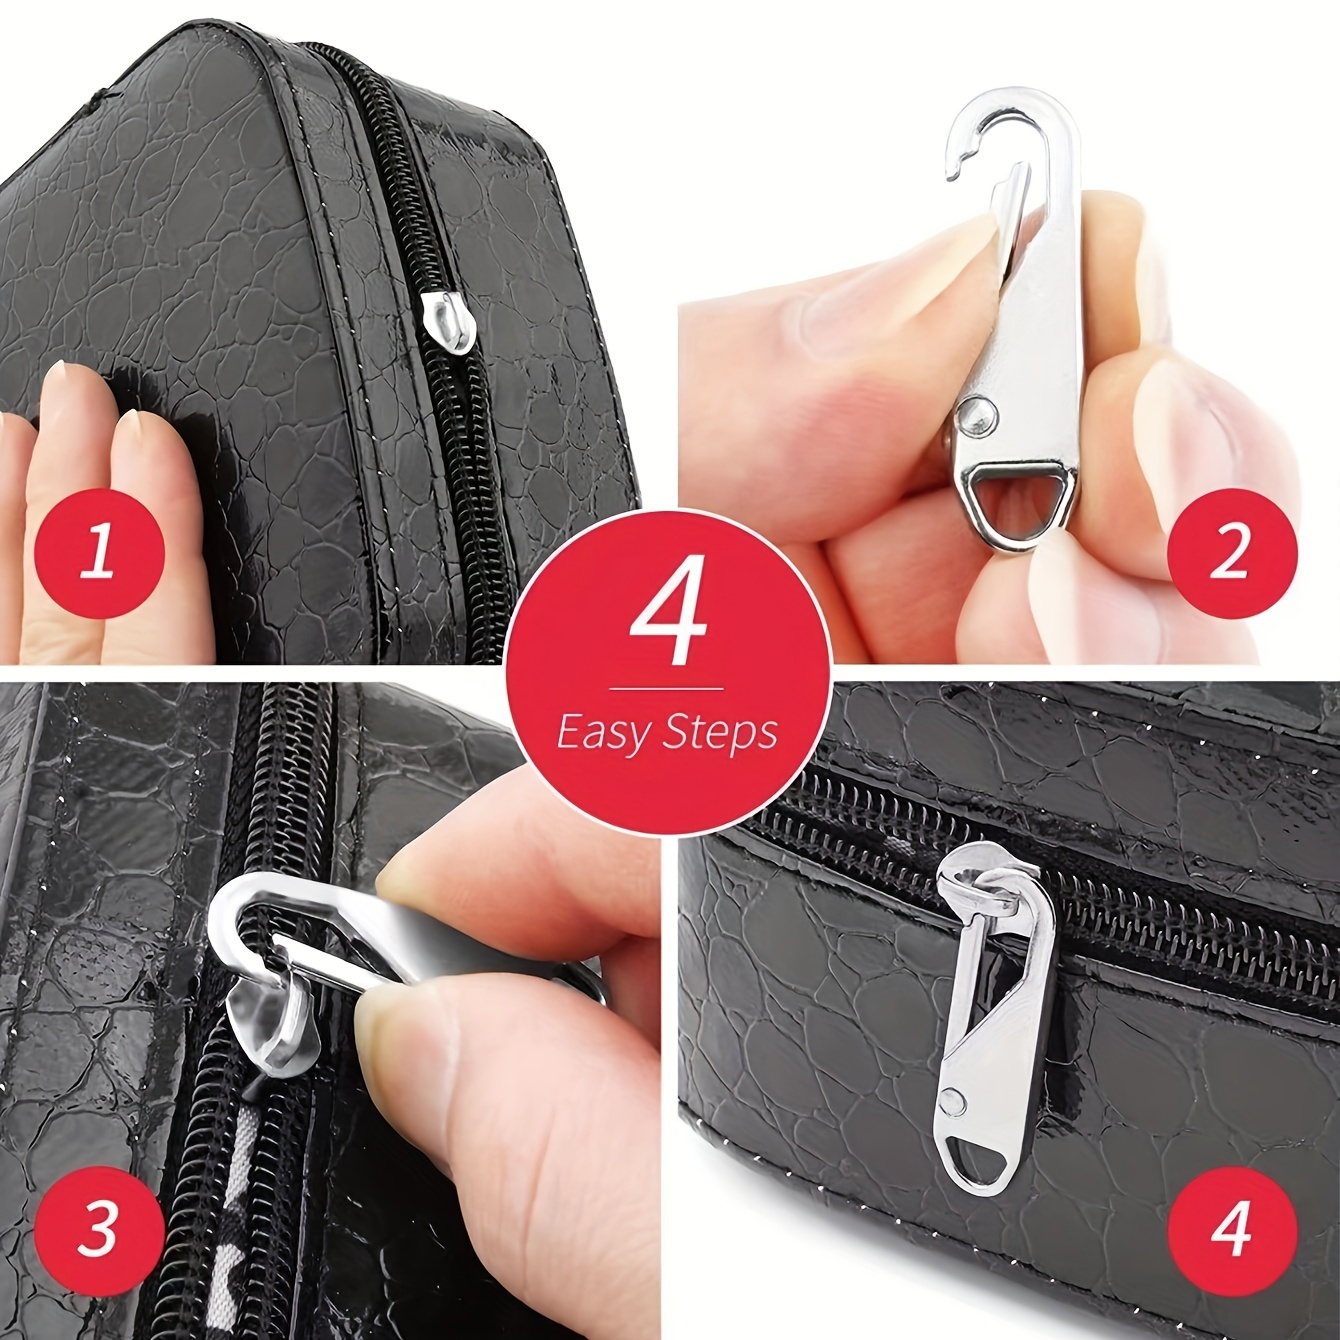 3 Easy DIY Repairs for Broken Zippers